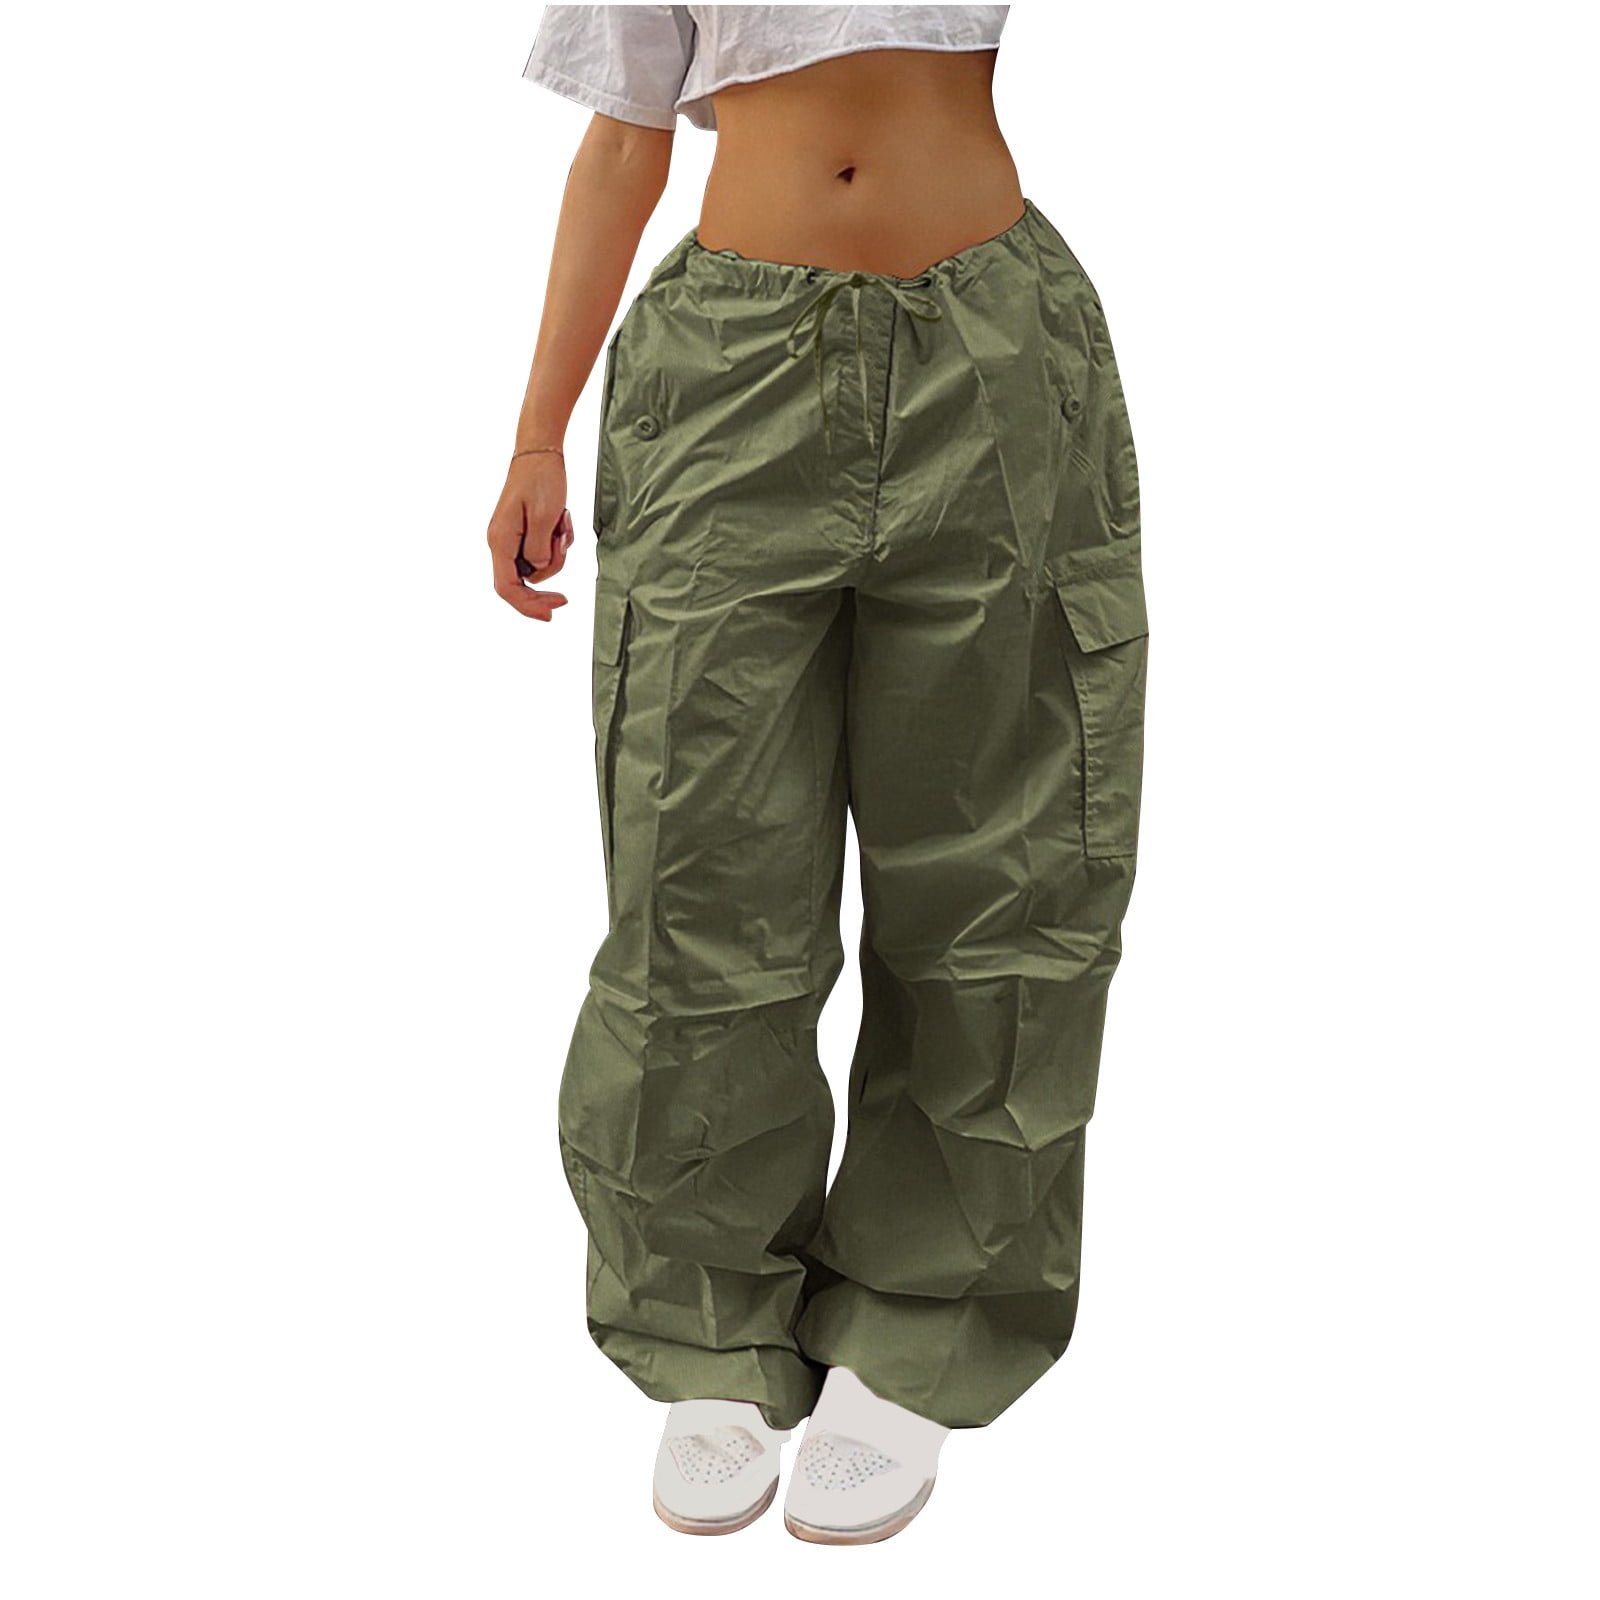 YanHoo Women's Cargo Pants Low Rise Flap Pocket Parachute Pants